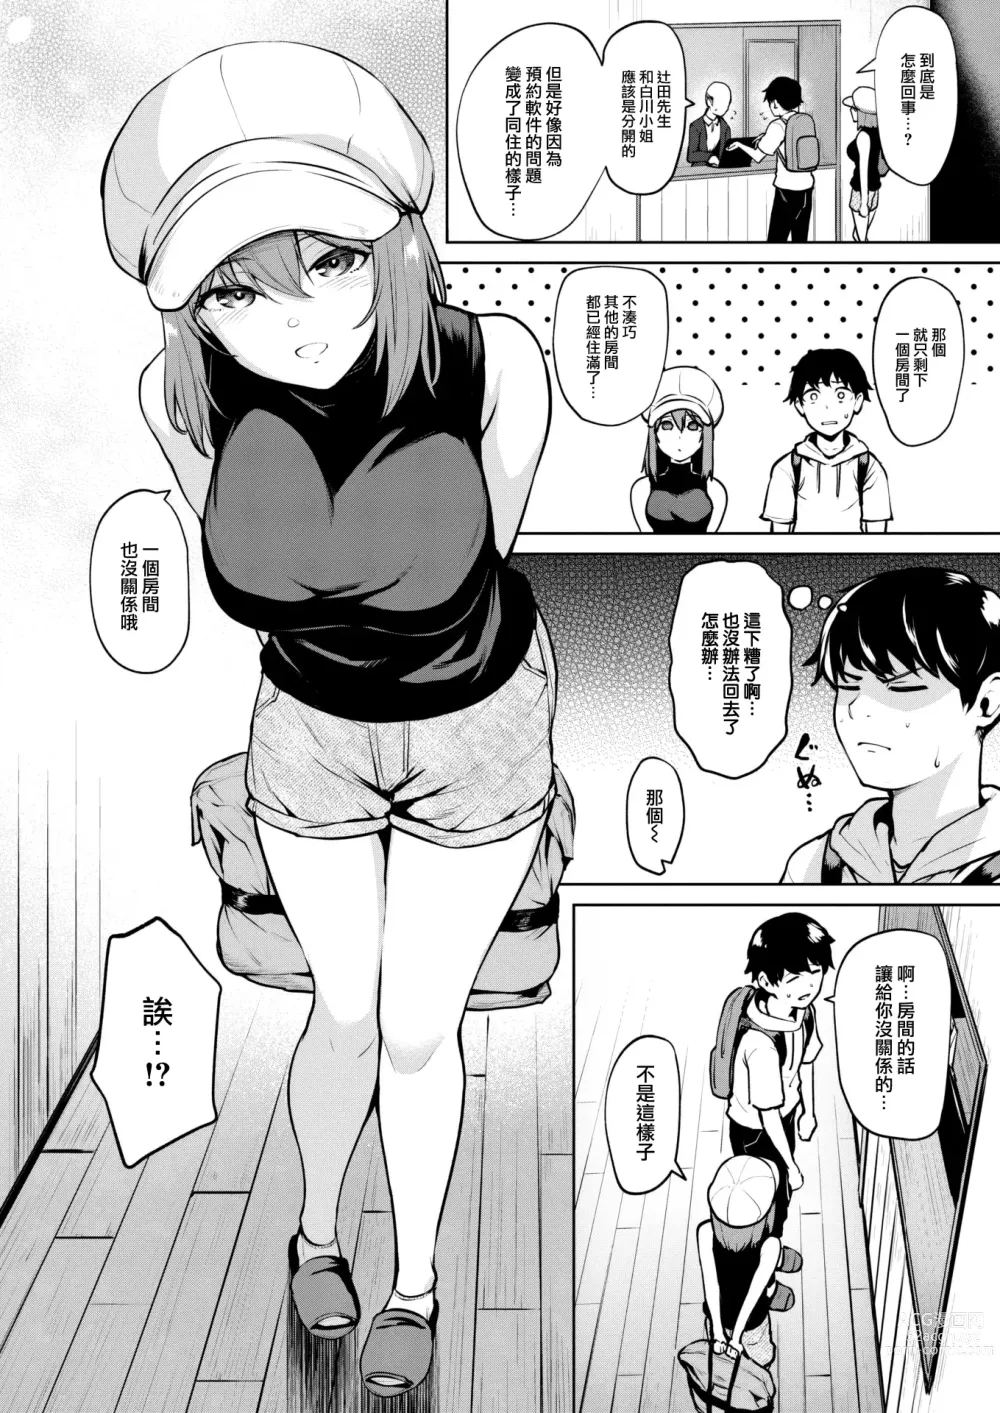 Page 3 of manga Shinnmitsu